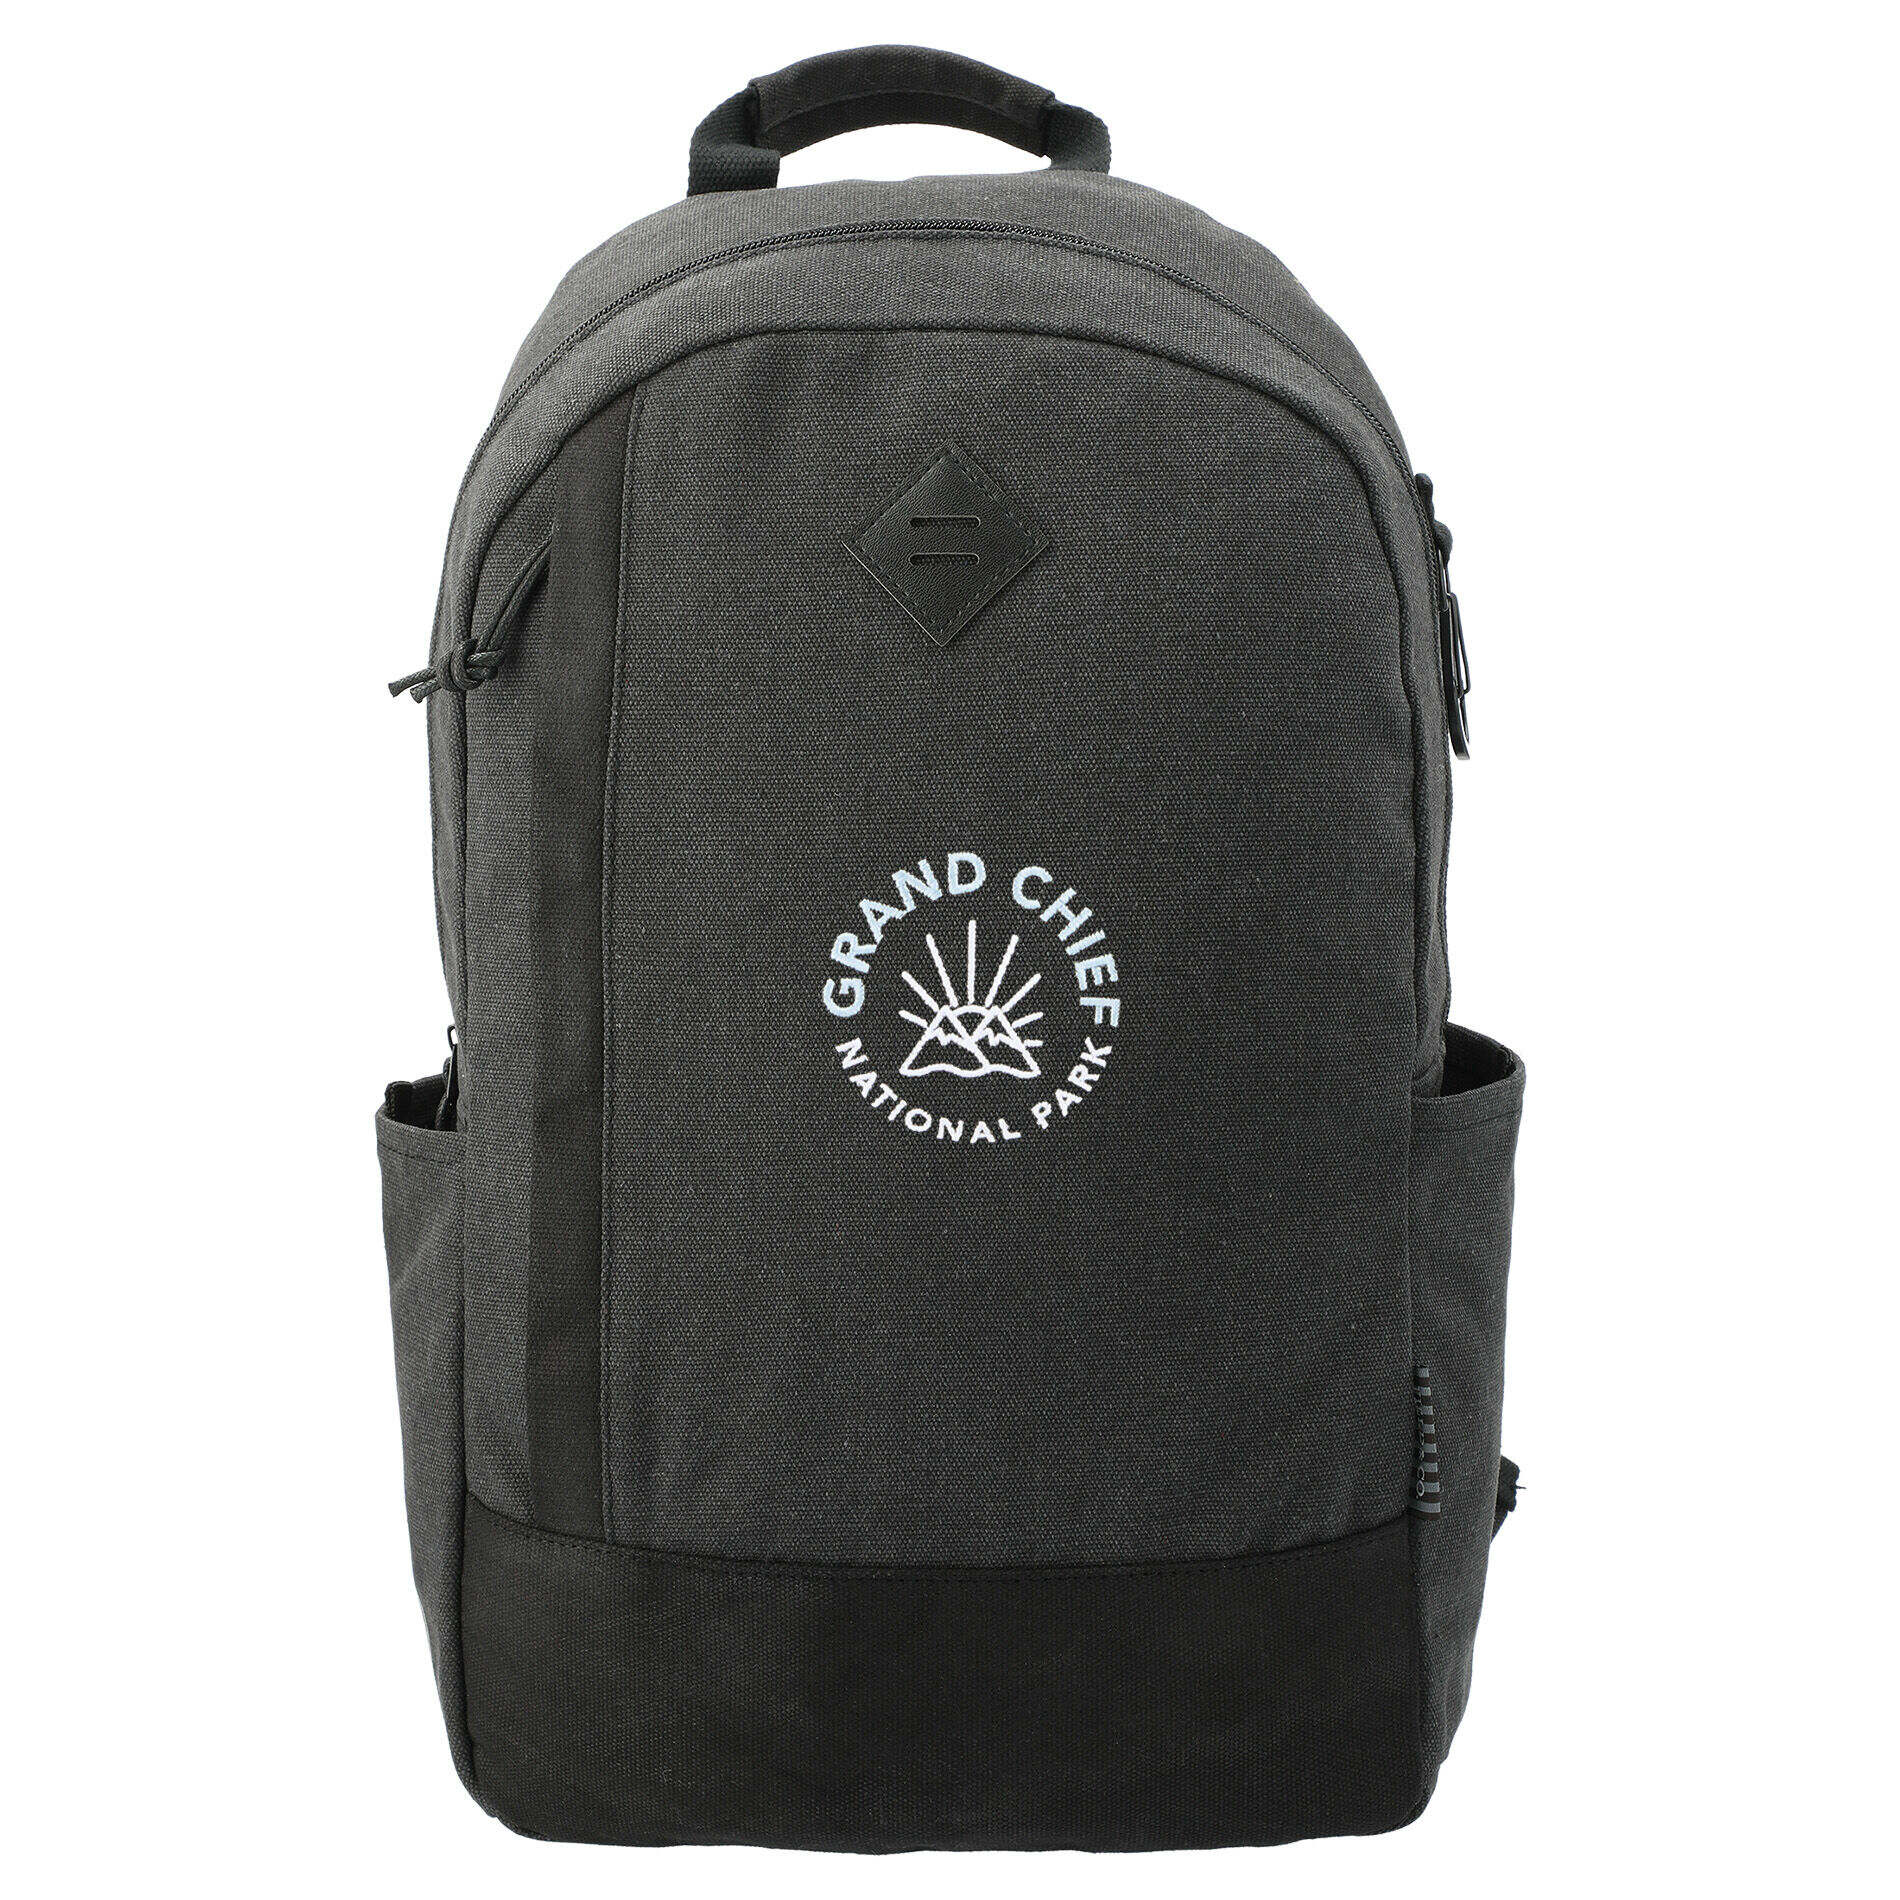 Branded Field & Co. Woodland 15″ Computer Backpack Black